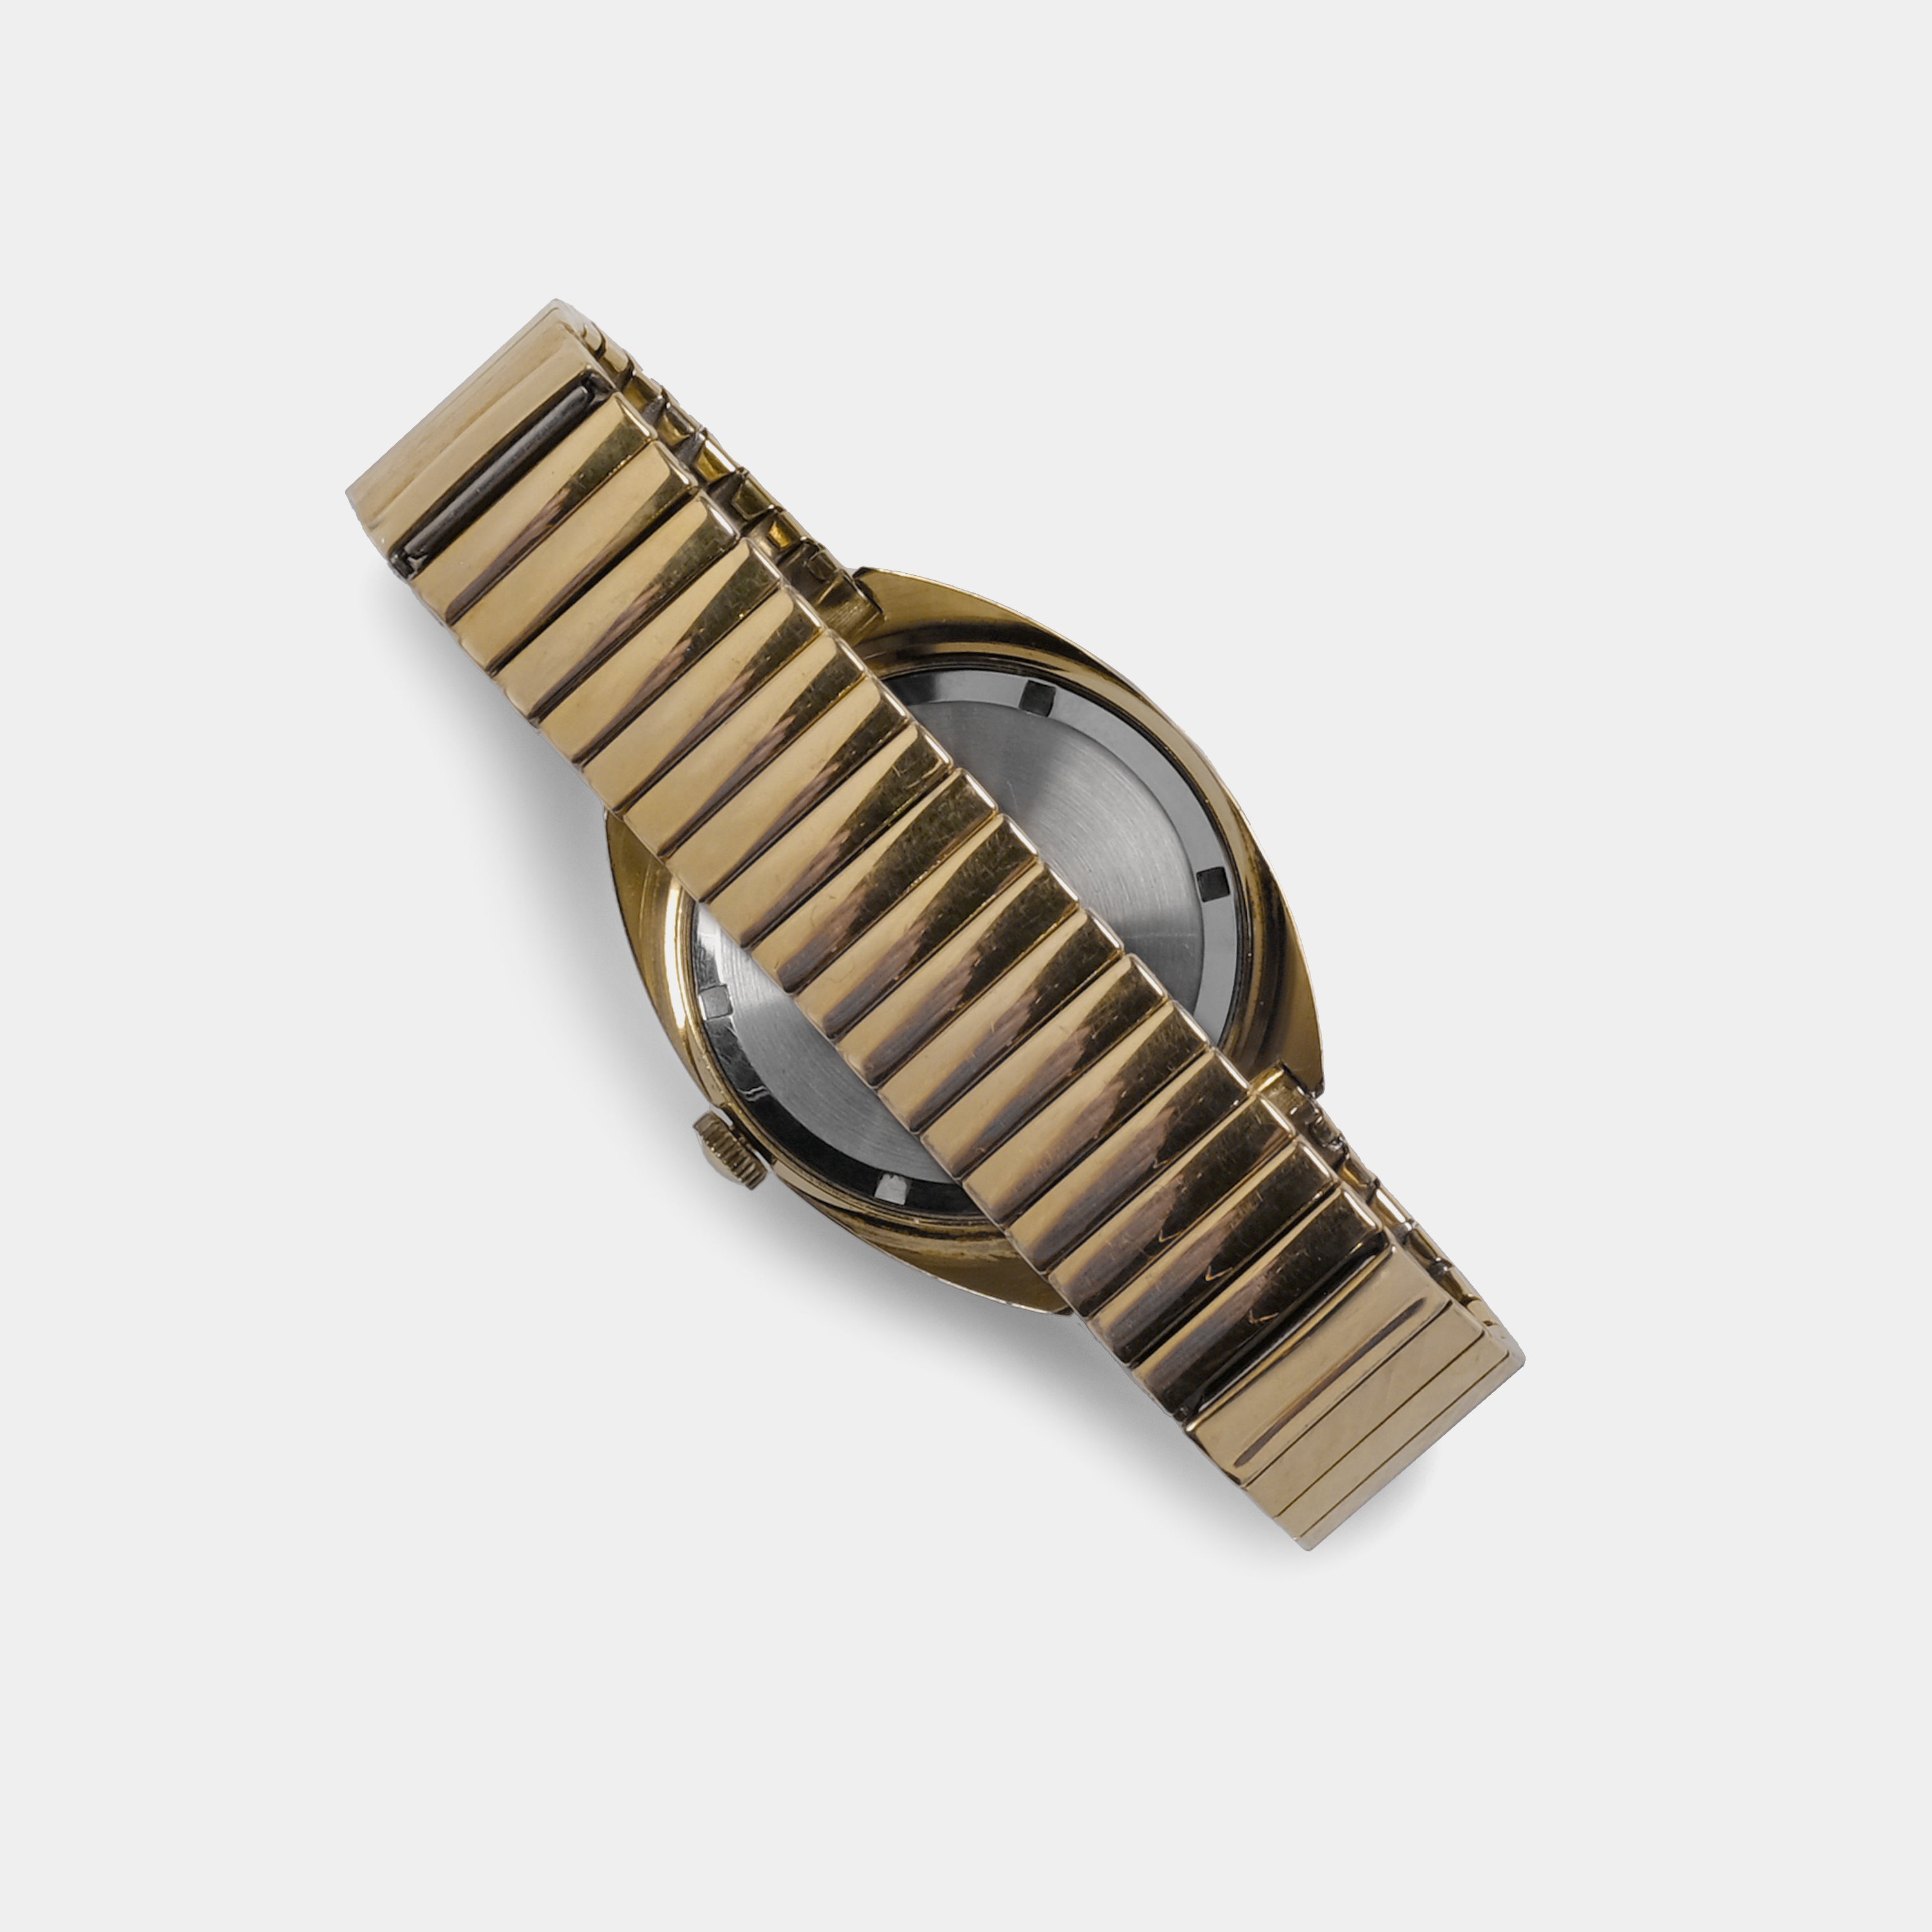 Elgin Manual-Wind ref. 6972 Circa 1960s Wristwatch